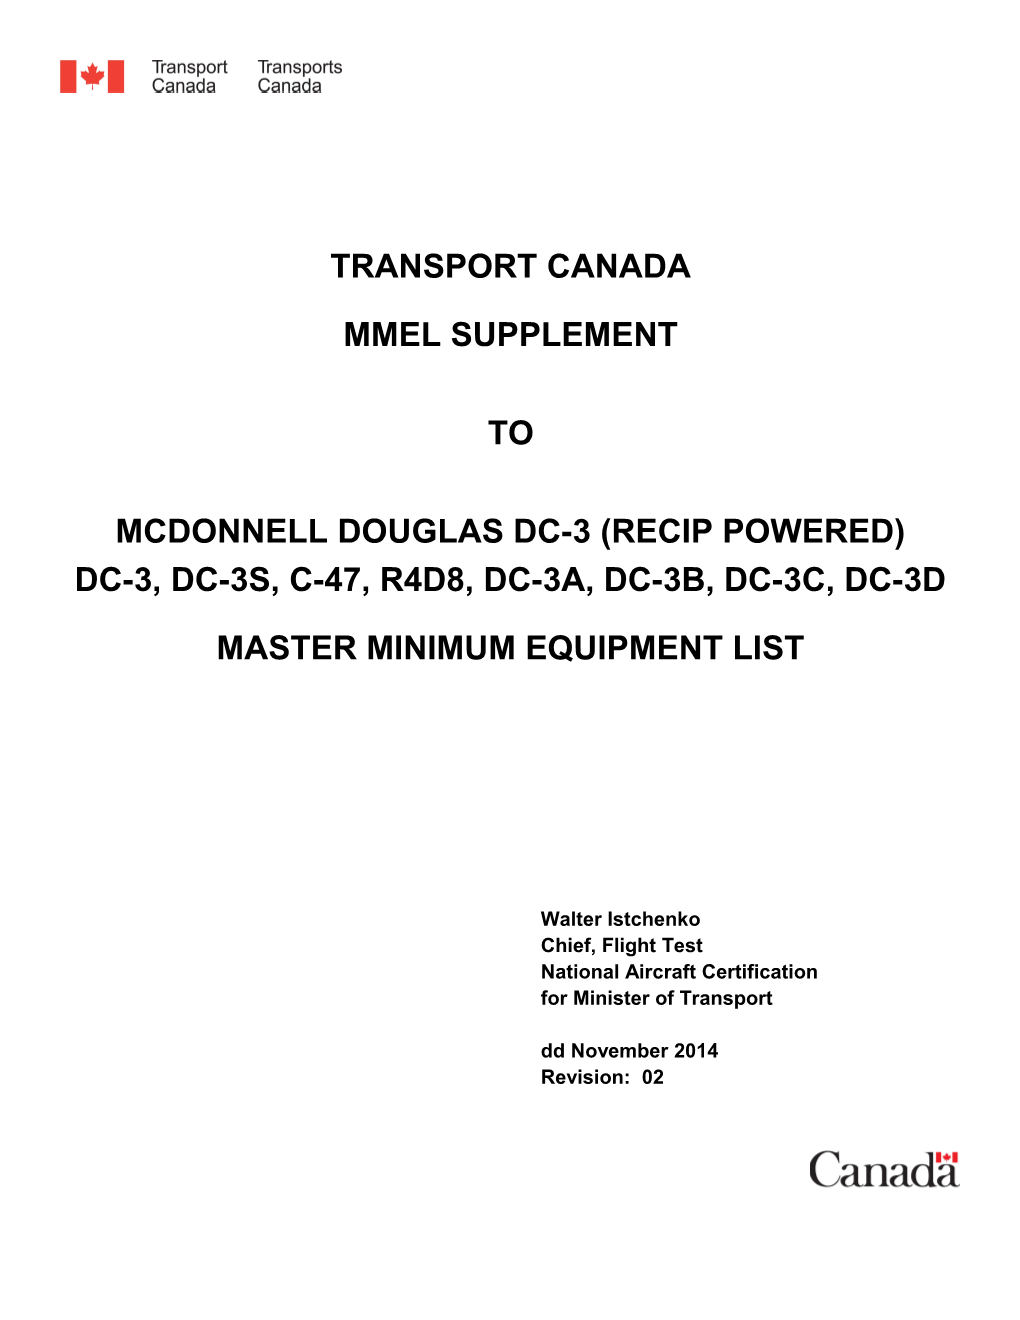 Mcdonnell Douglas Dc-3 (Recip Powered)